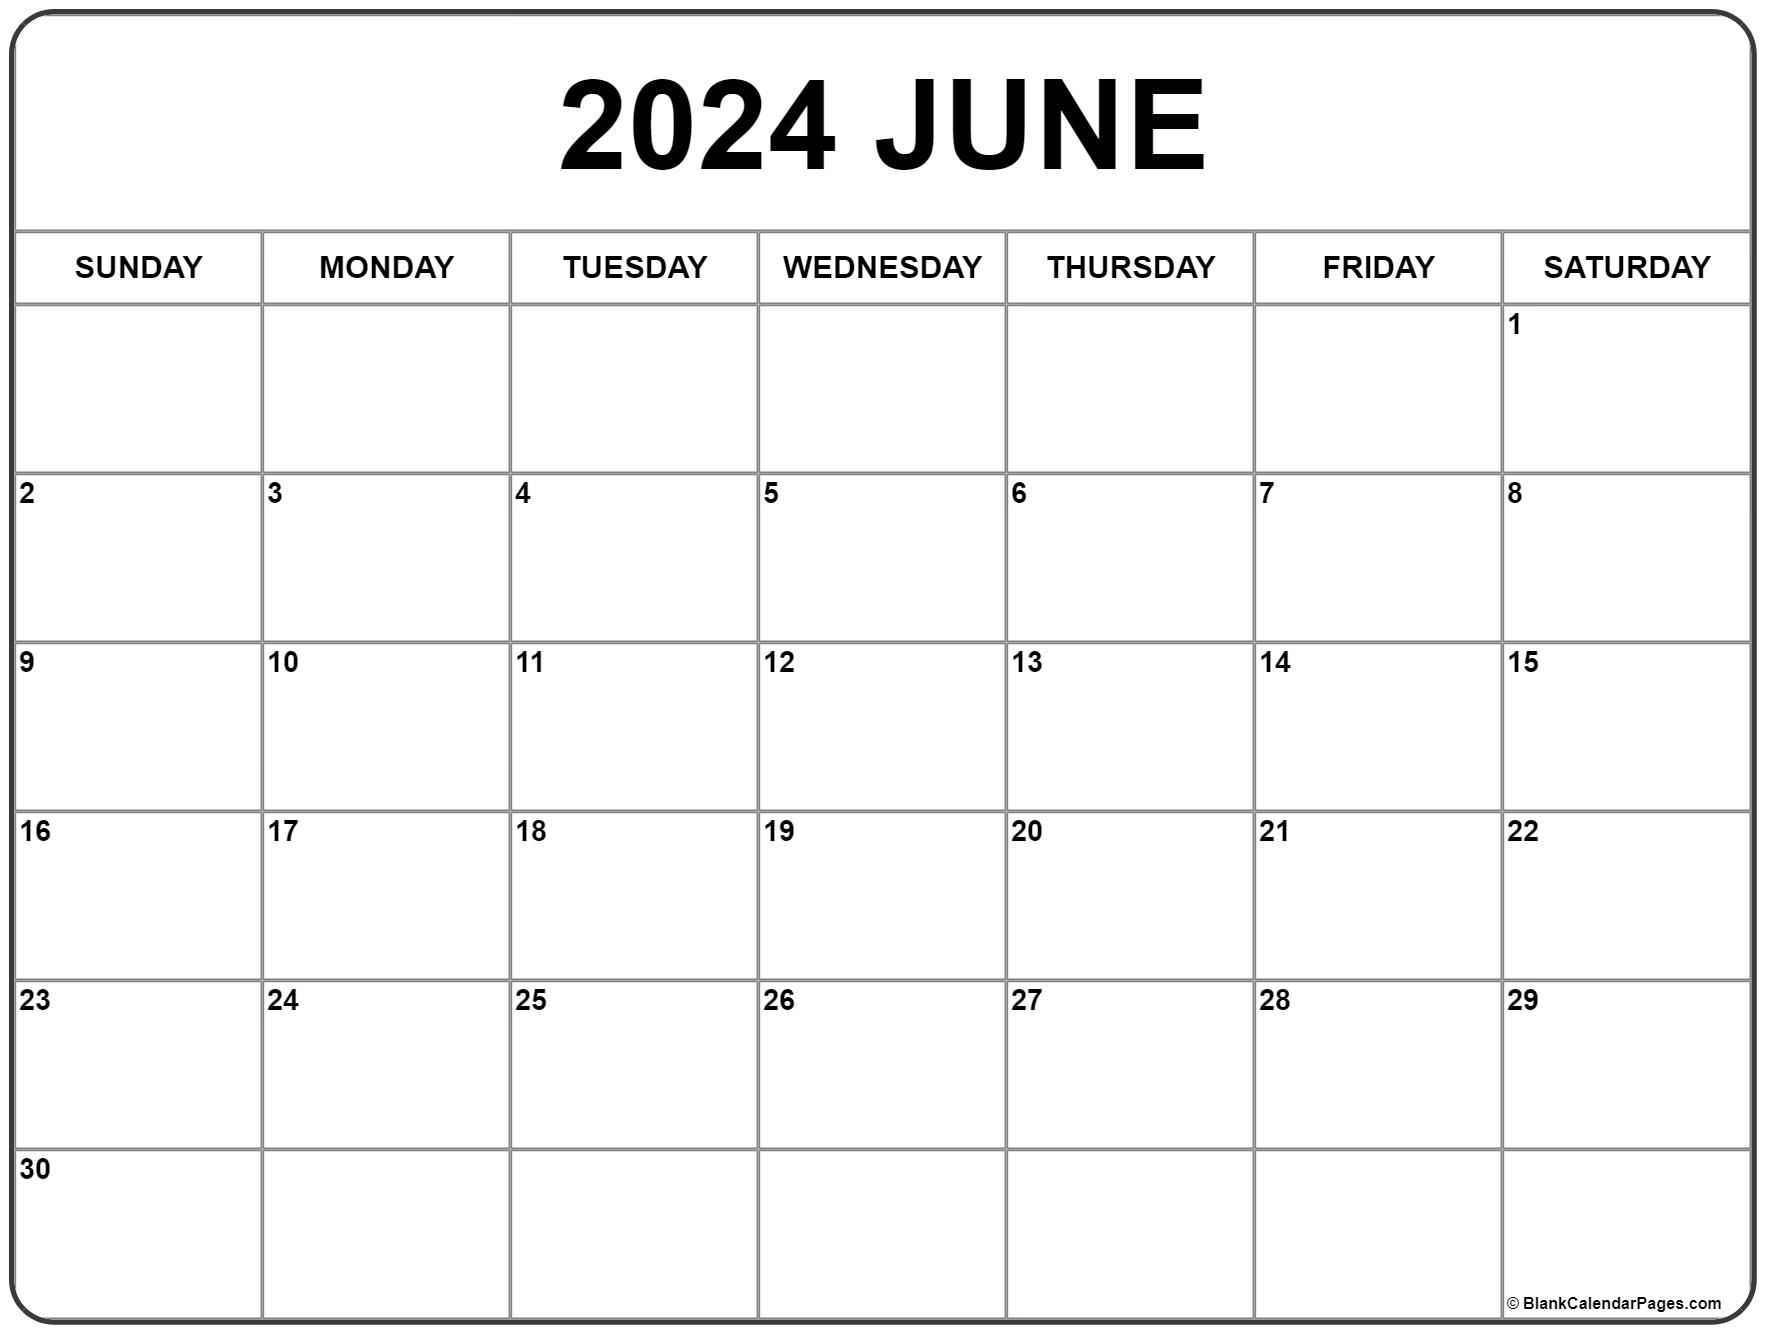 June 2024 Calendar | Free Printable Calendar | Printable Calendar 2024 June